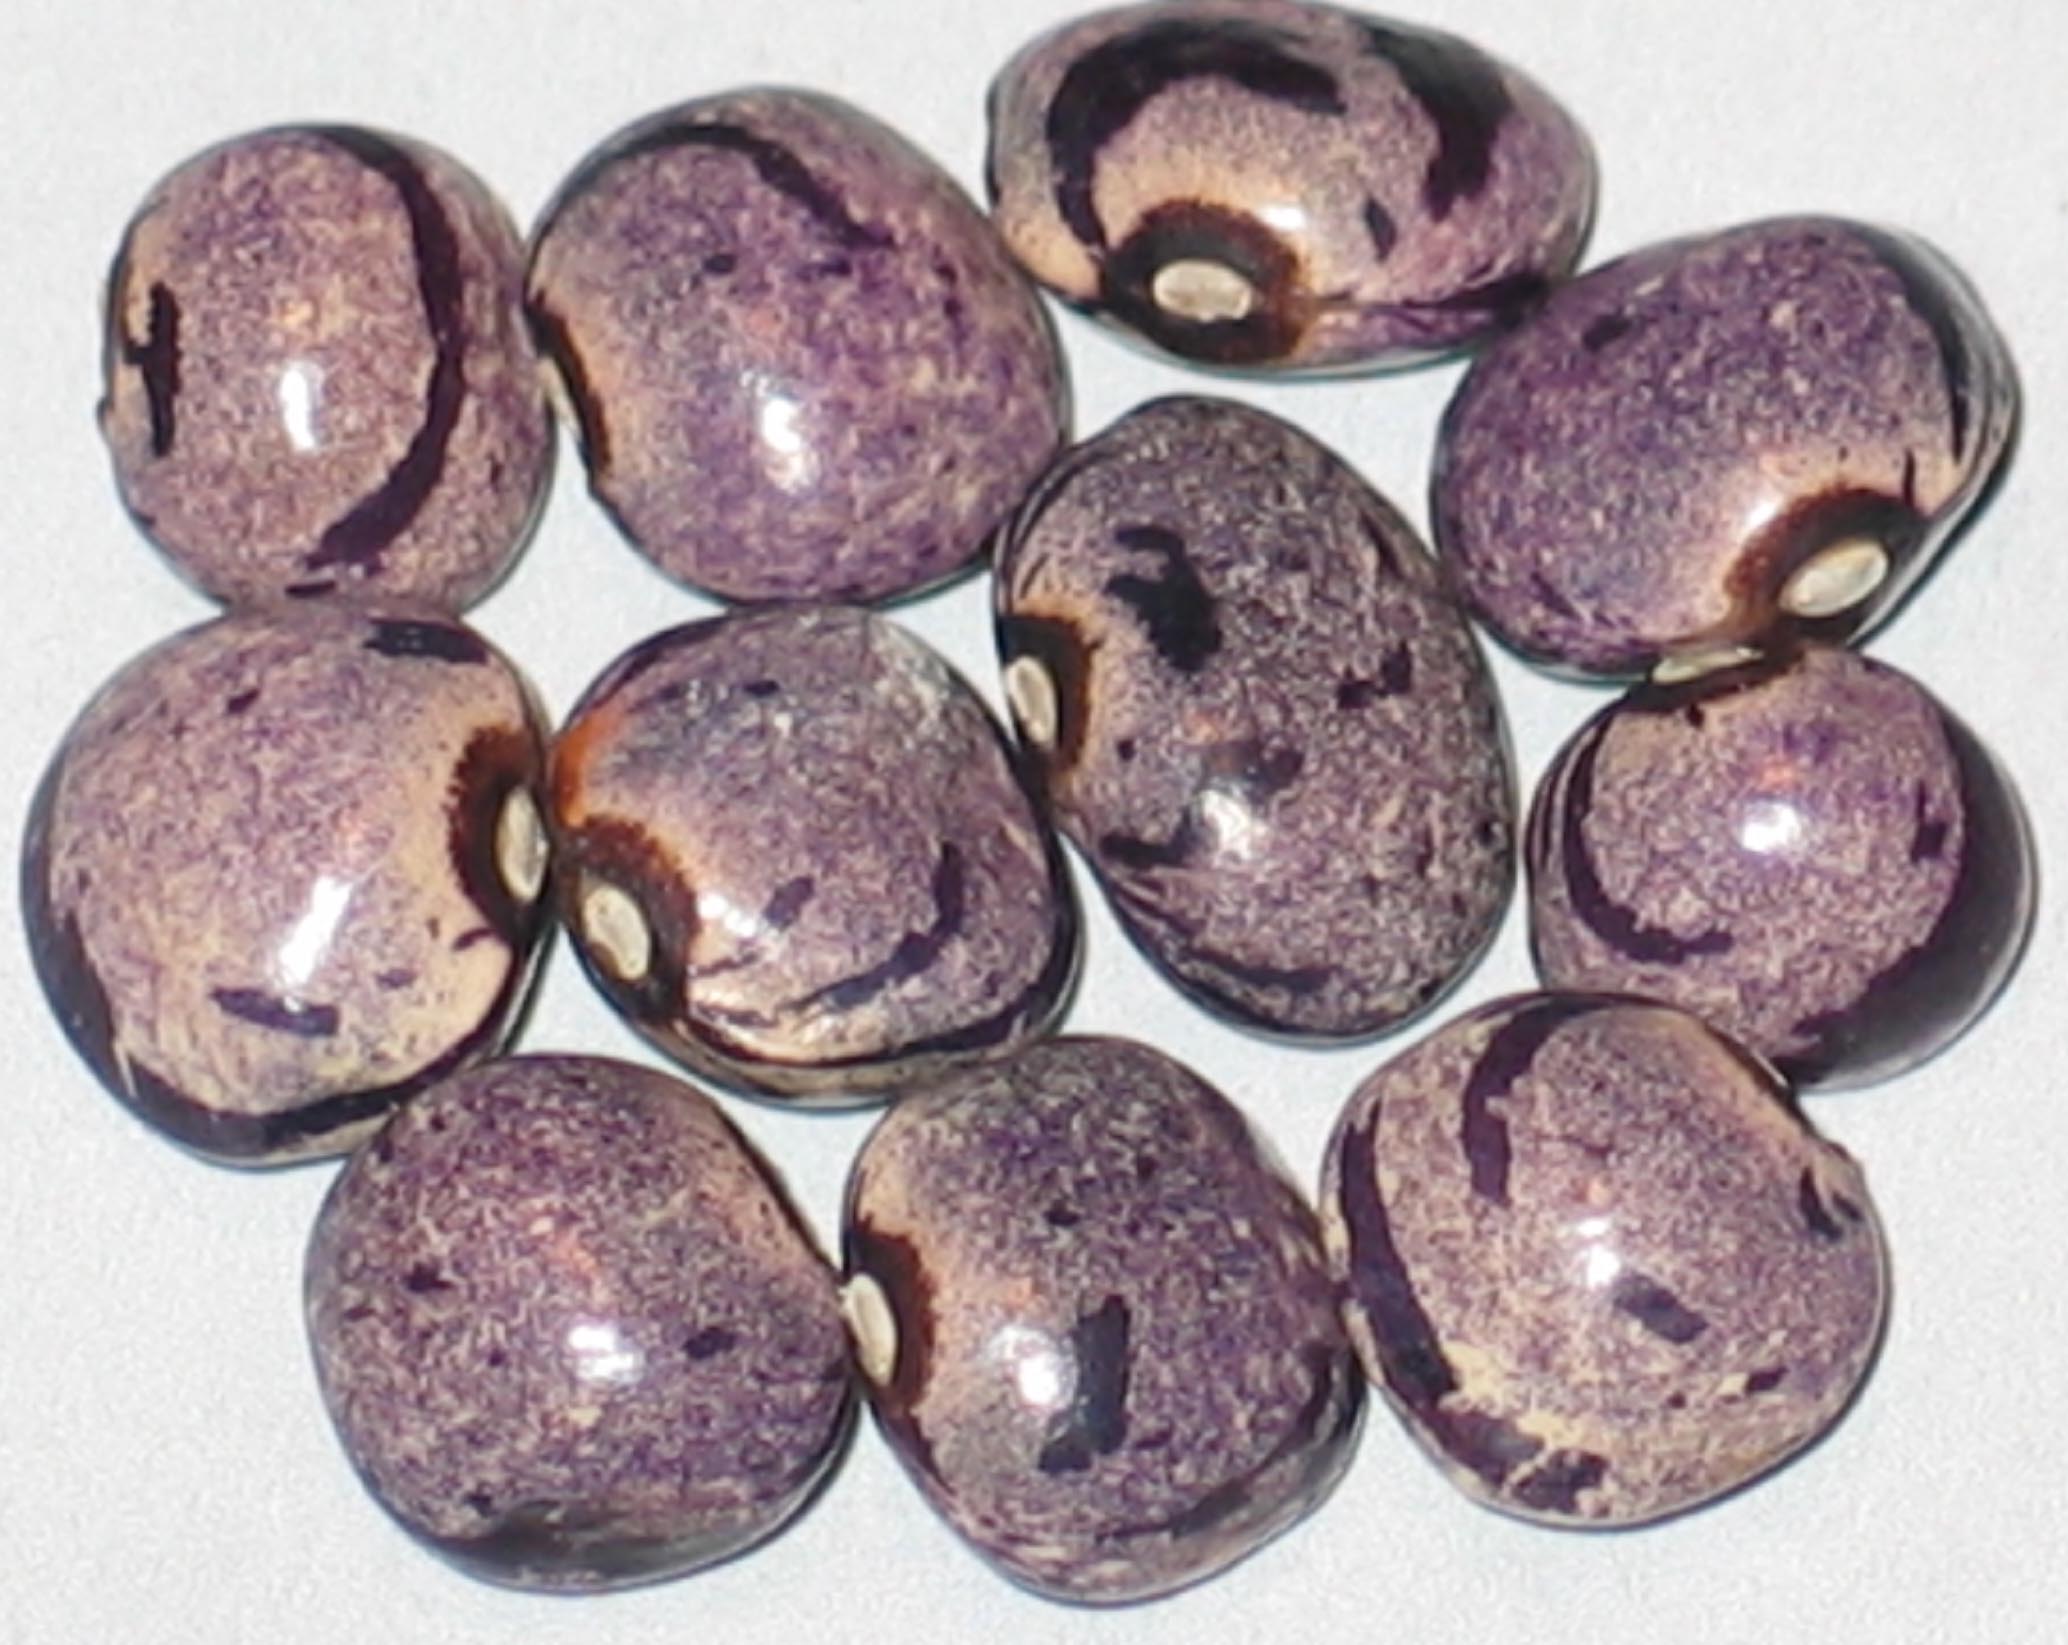 image of Cranberryfleider beans